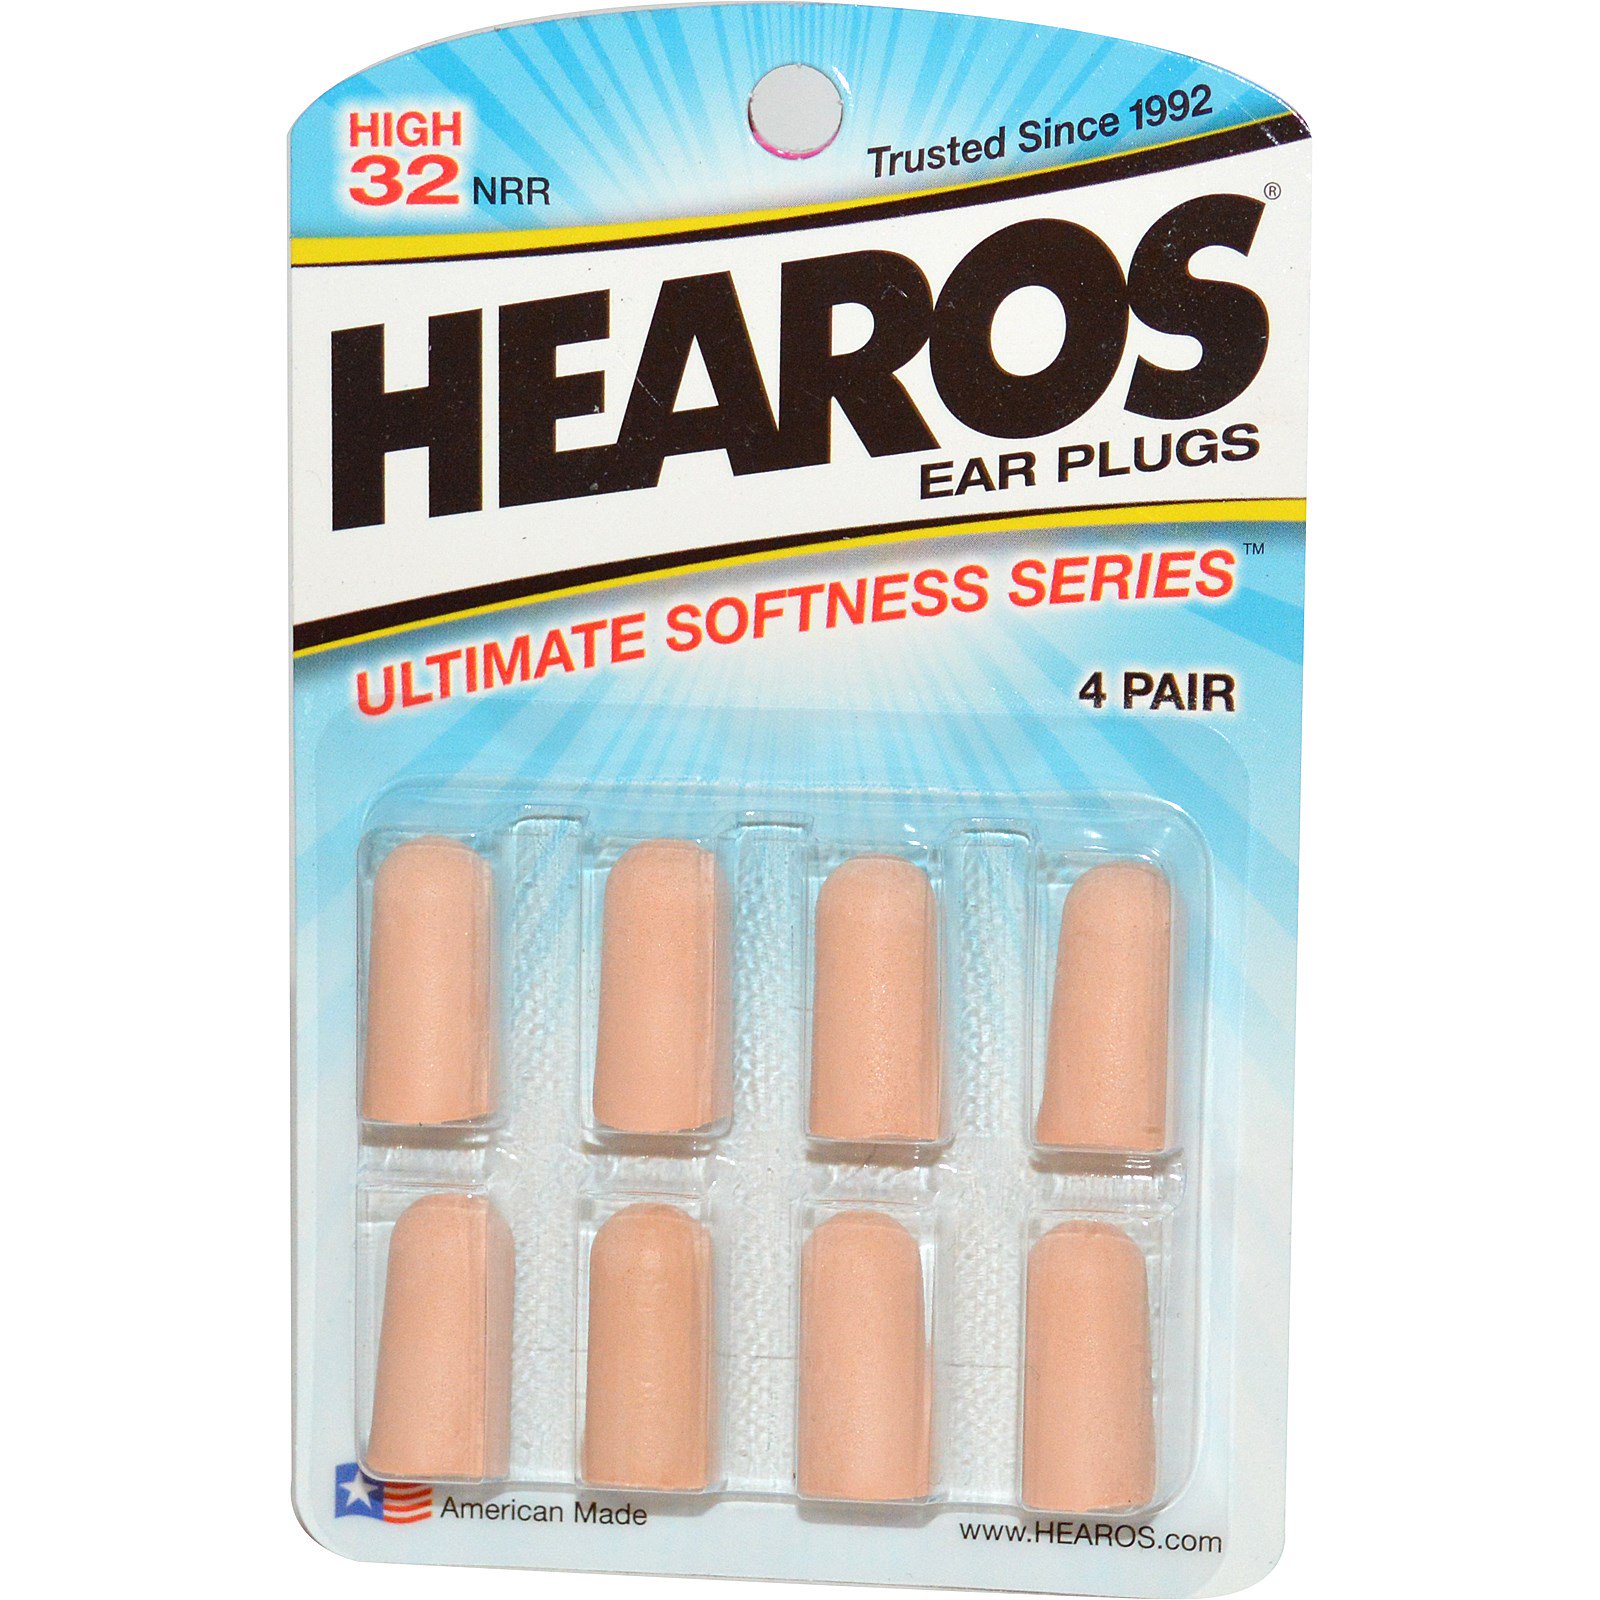 14 pairs Hearos ultimate softness series ear plugs 